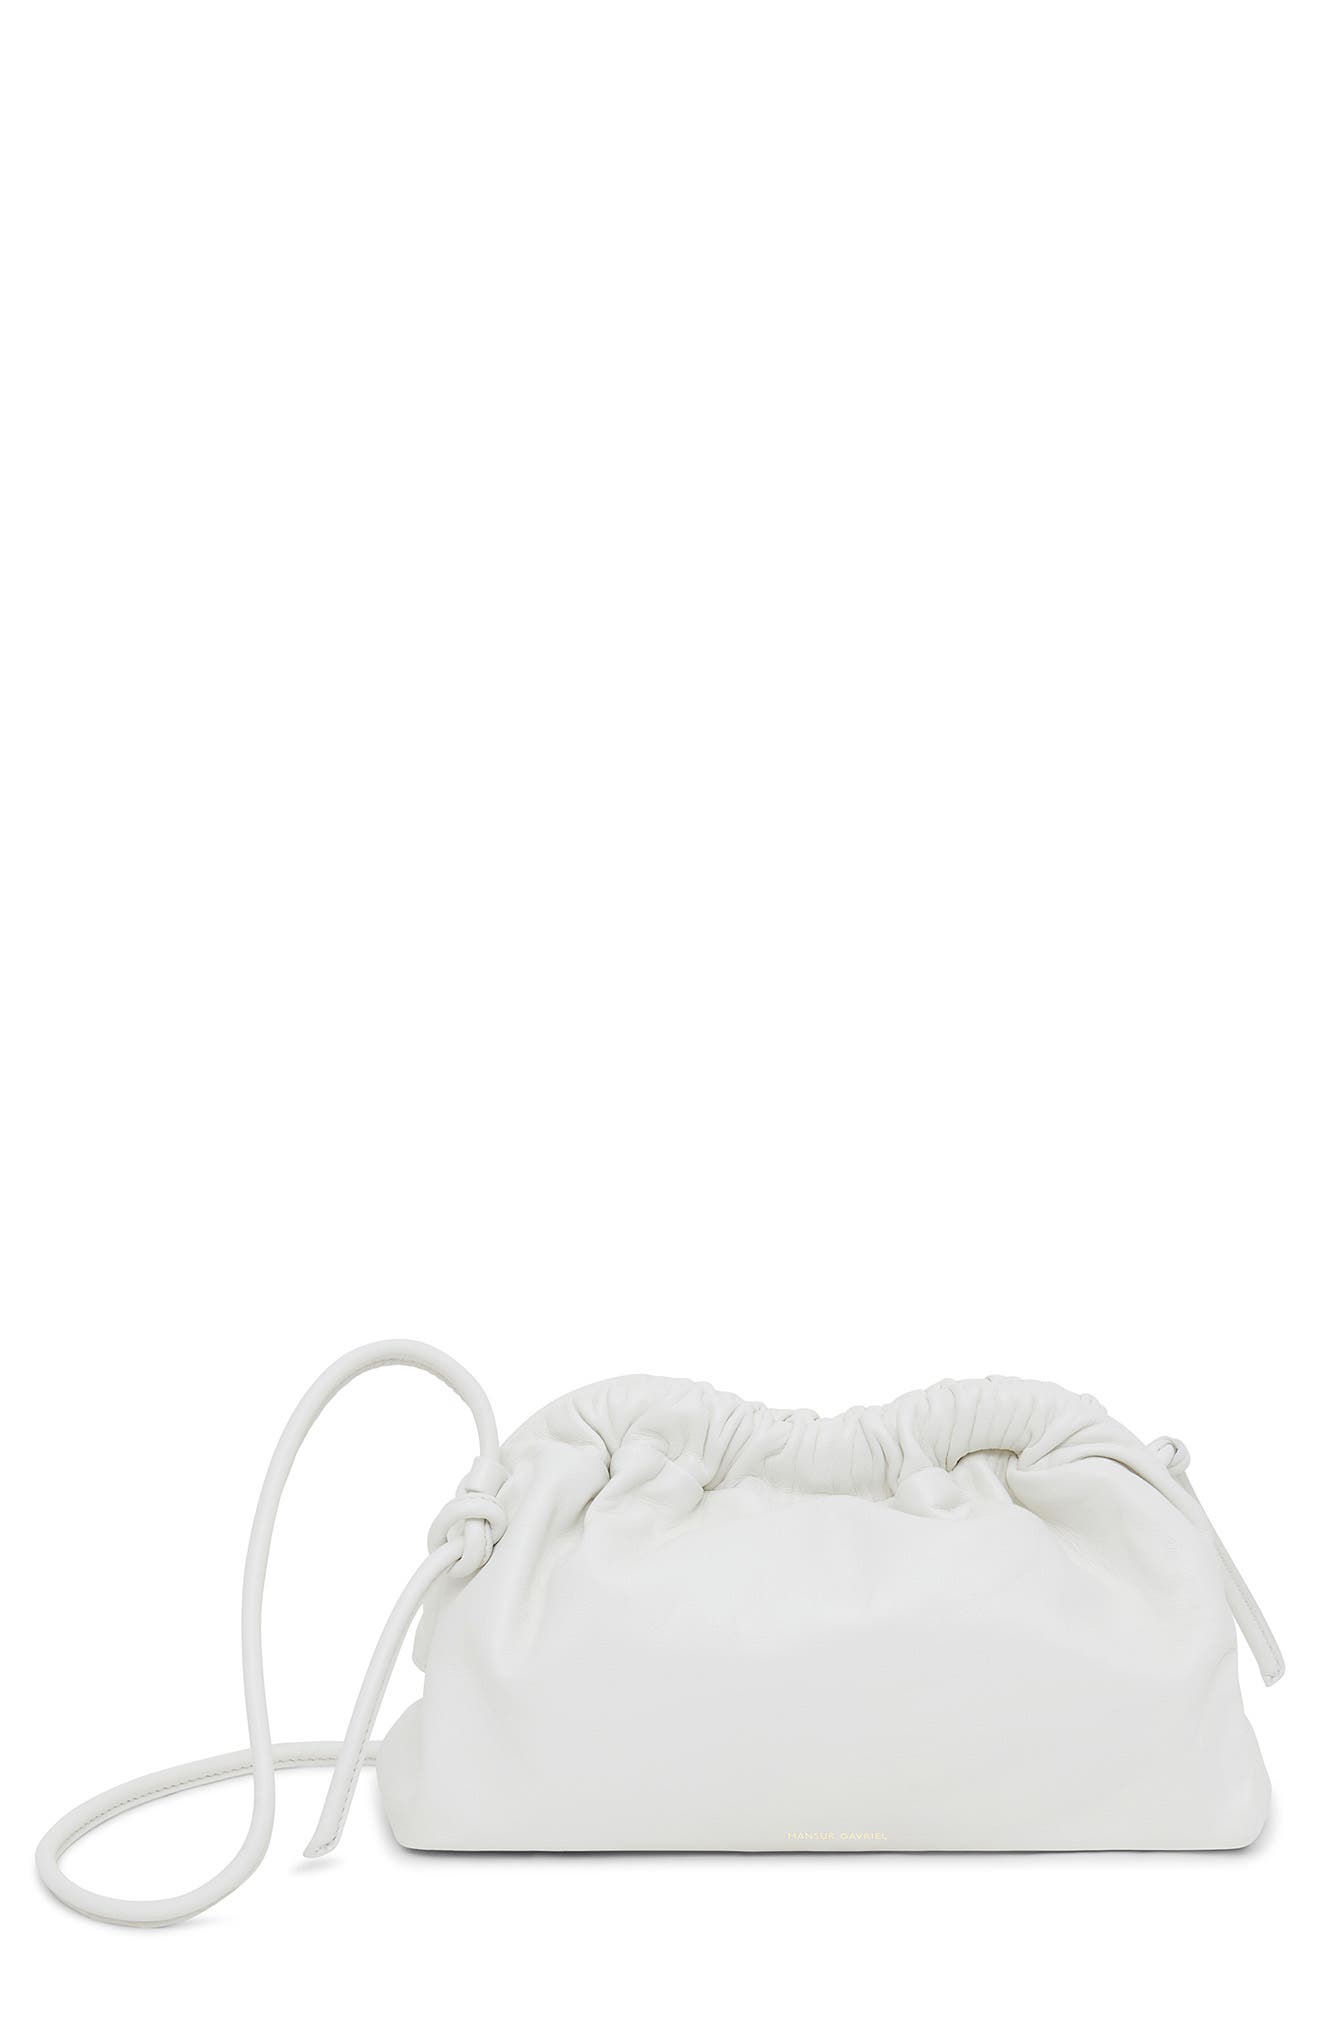 Flowers White Soft Spring Tote Bag Purse Handbag For Women Girls 